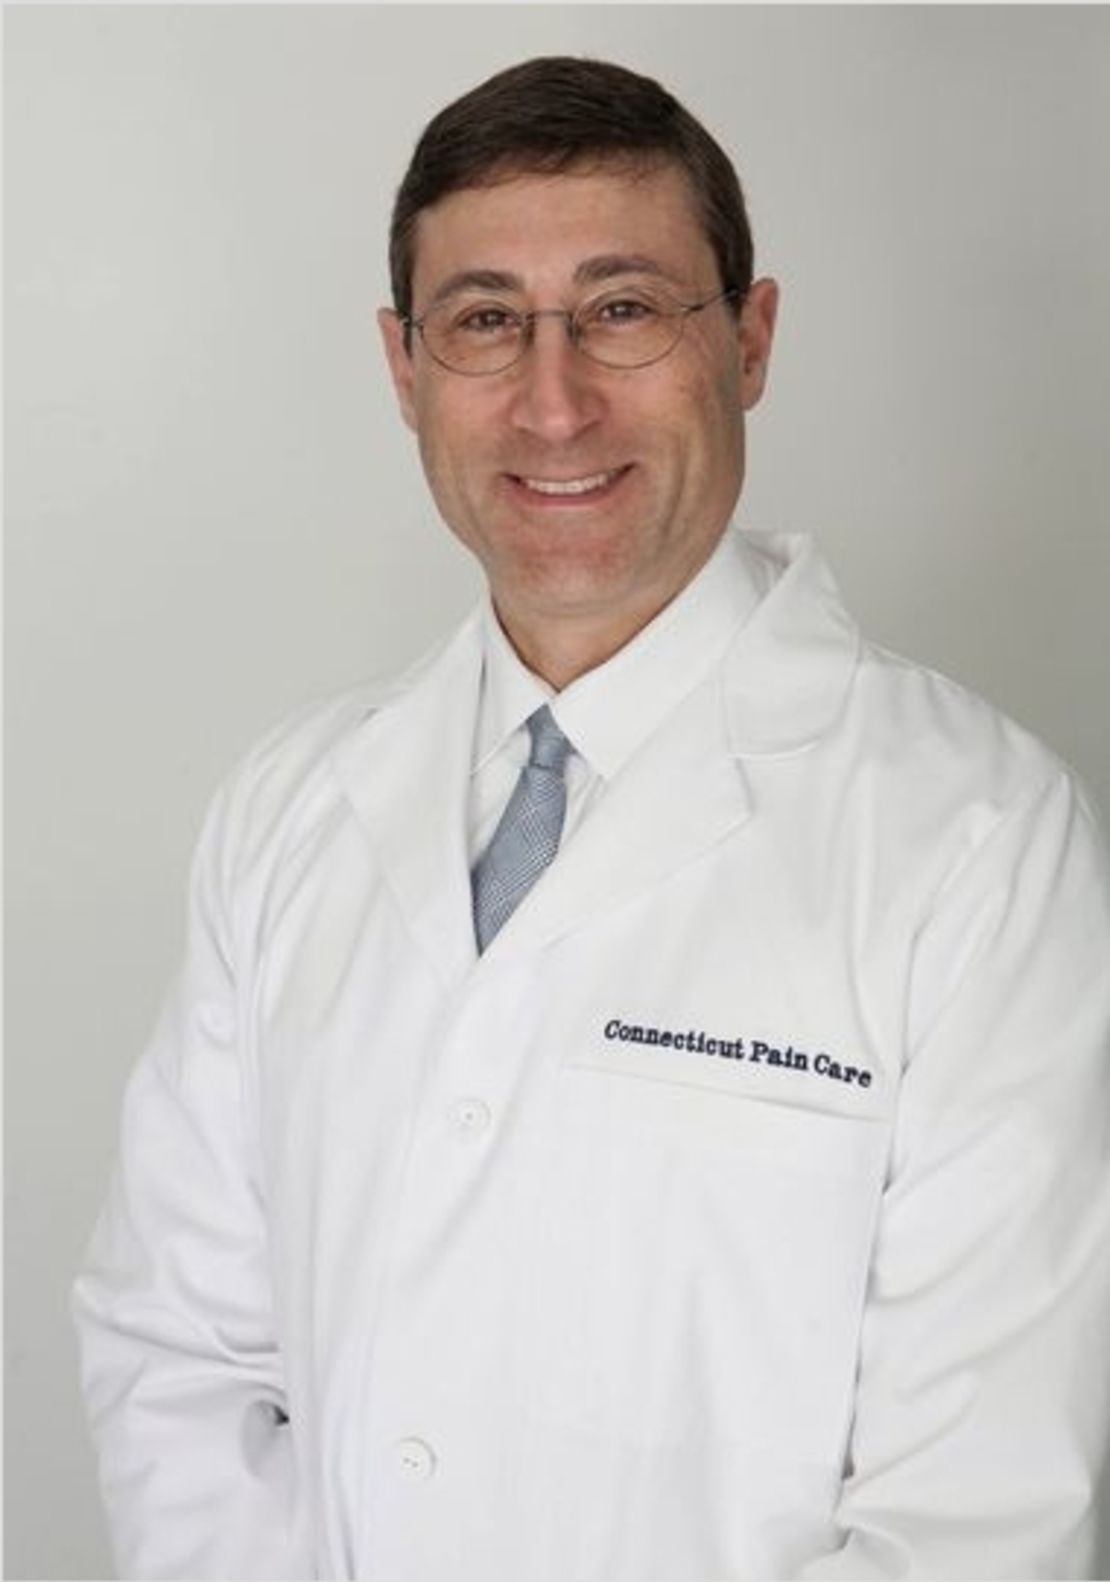 Dr. David Kloth